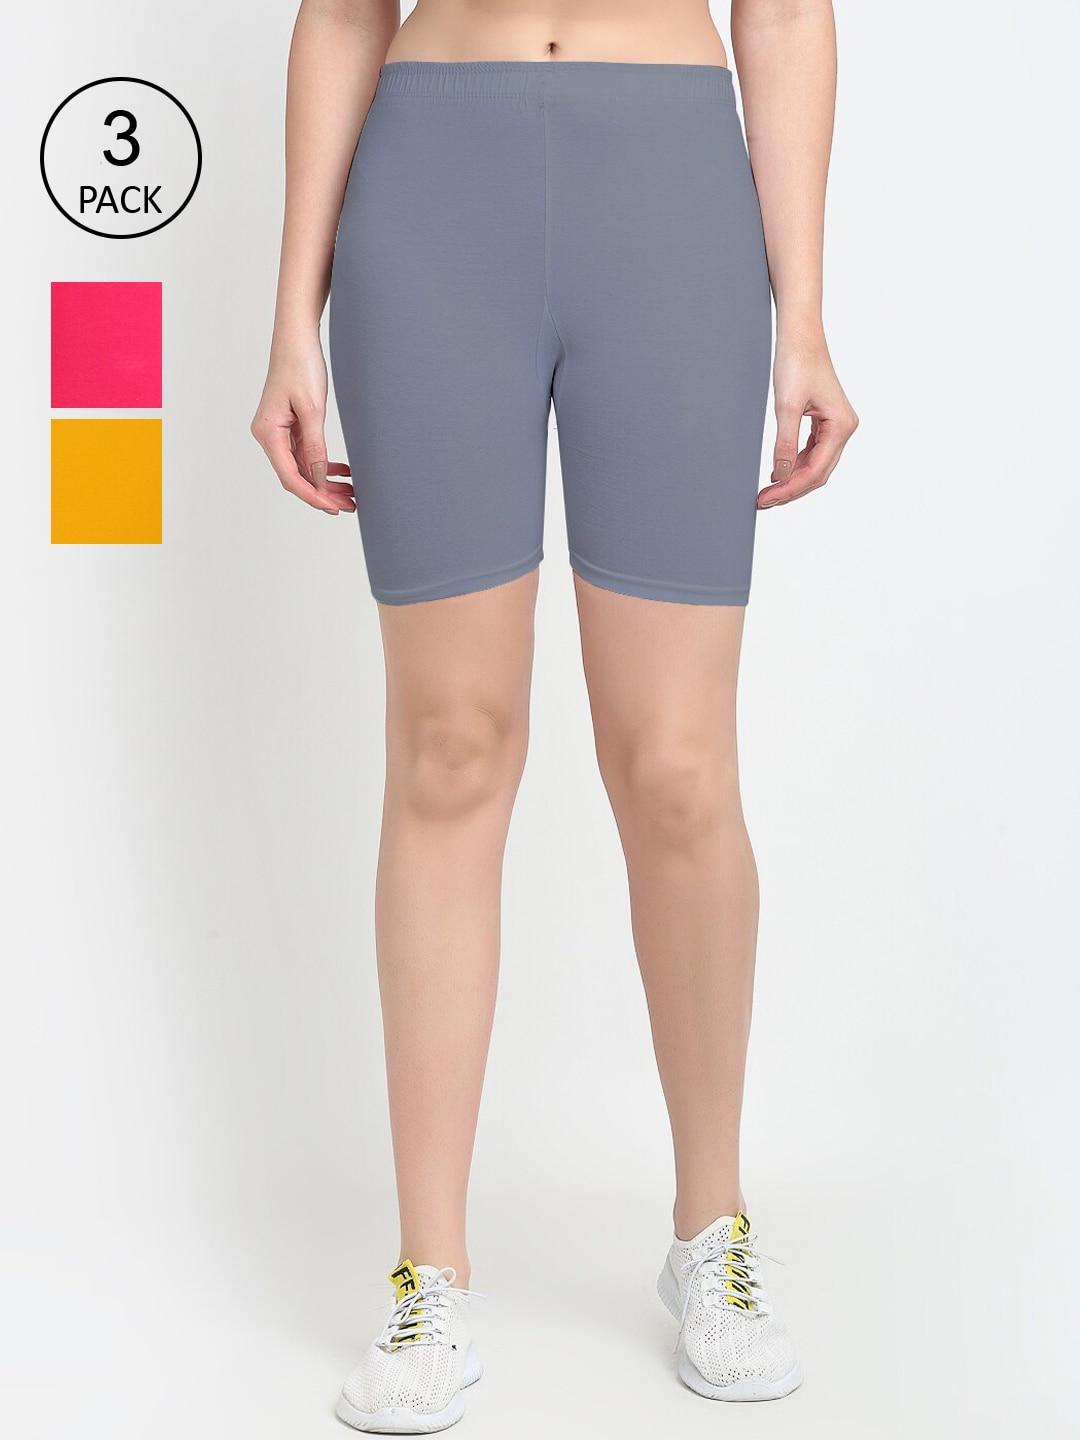 gracit pack of 3 women grey cycling sports shorts